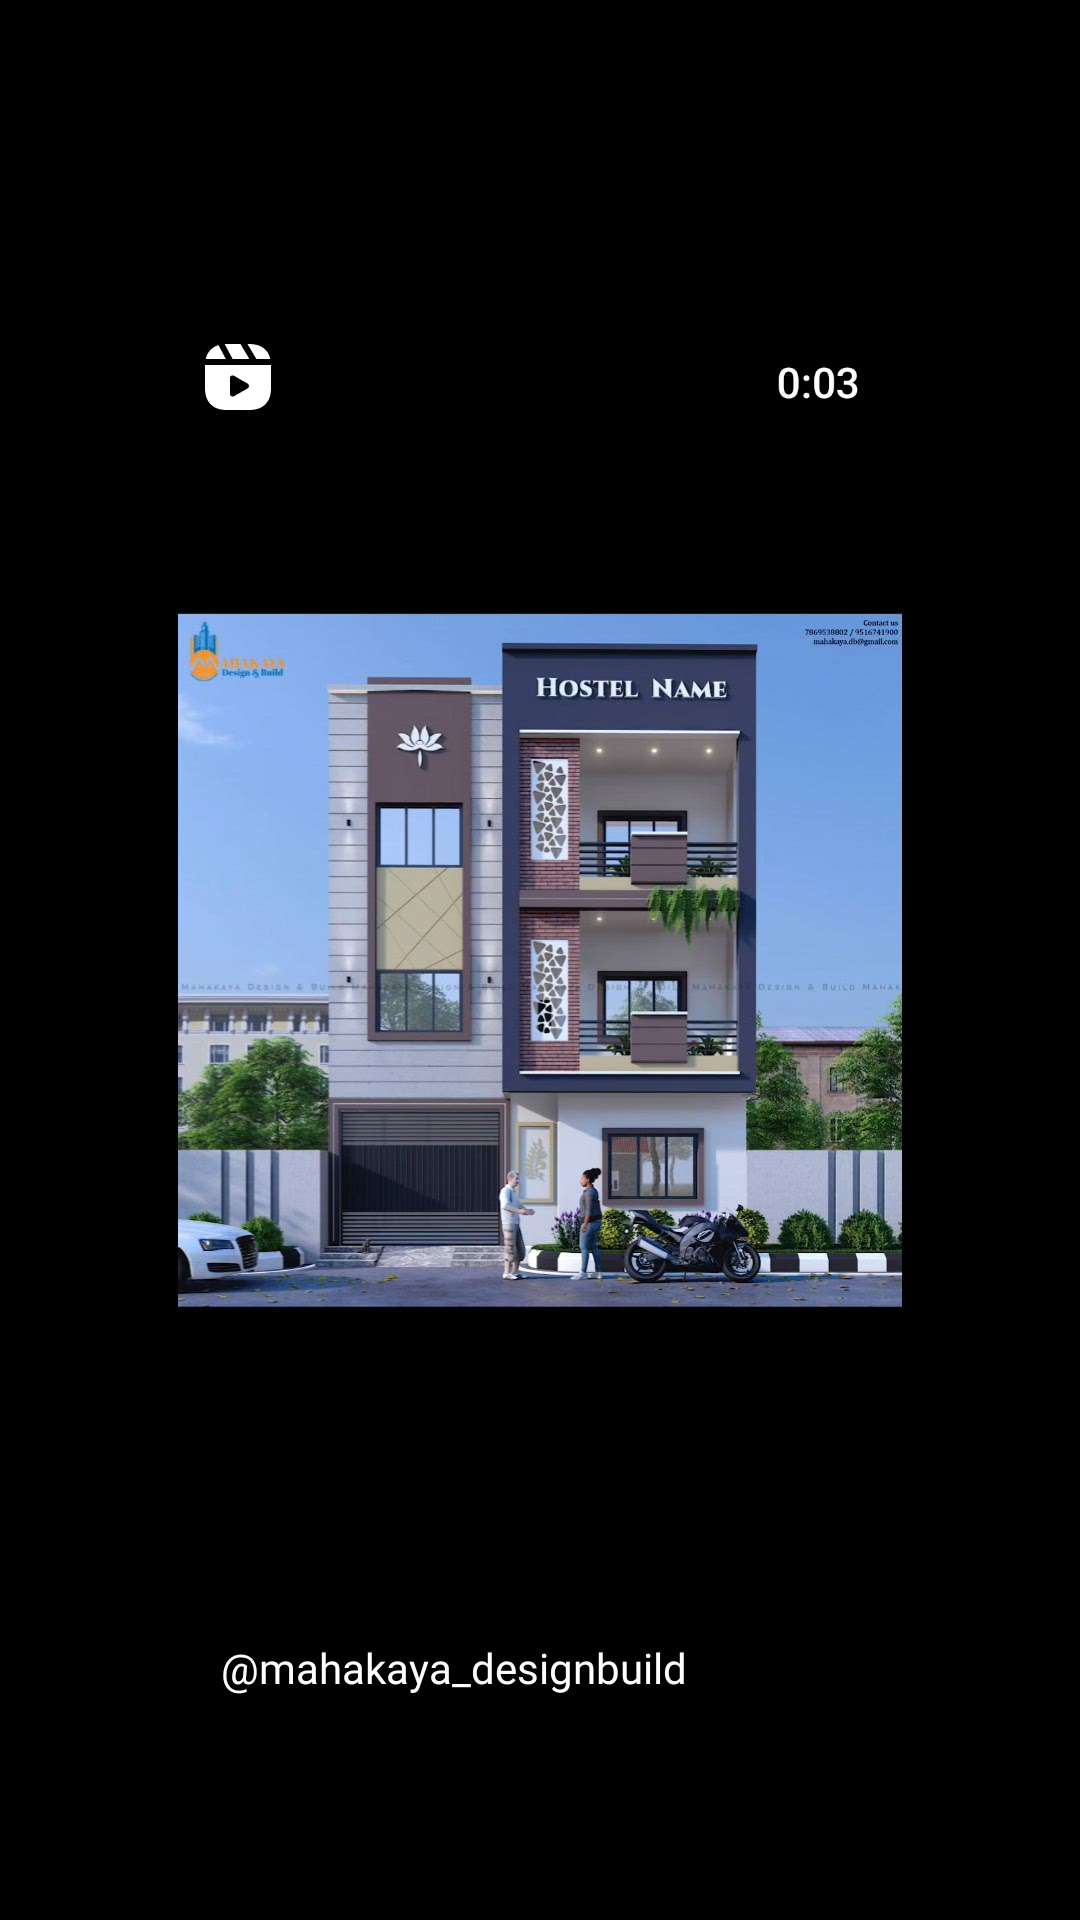 Modern Elevation Design🏬
Commercial building 

Mahakaya Design and Build 
mahakaya.db@gmail.com

_____________________________
 #design #building #designer #facade #civilengineering #modern #homedesign #interiors #exterior #architecture #lumion #sketchup #render #housedesign #resindentialdesign #autocad #engineer #architect #artist #designer #3dmodel #3dsmax